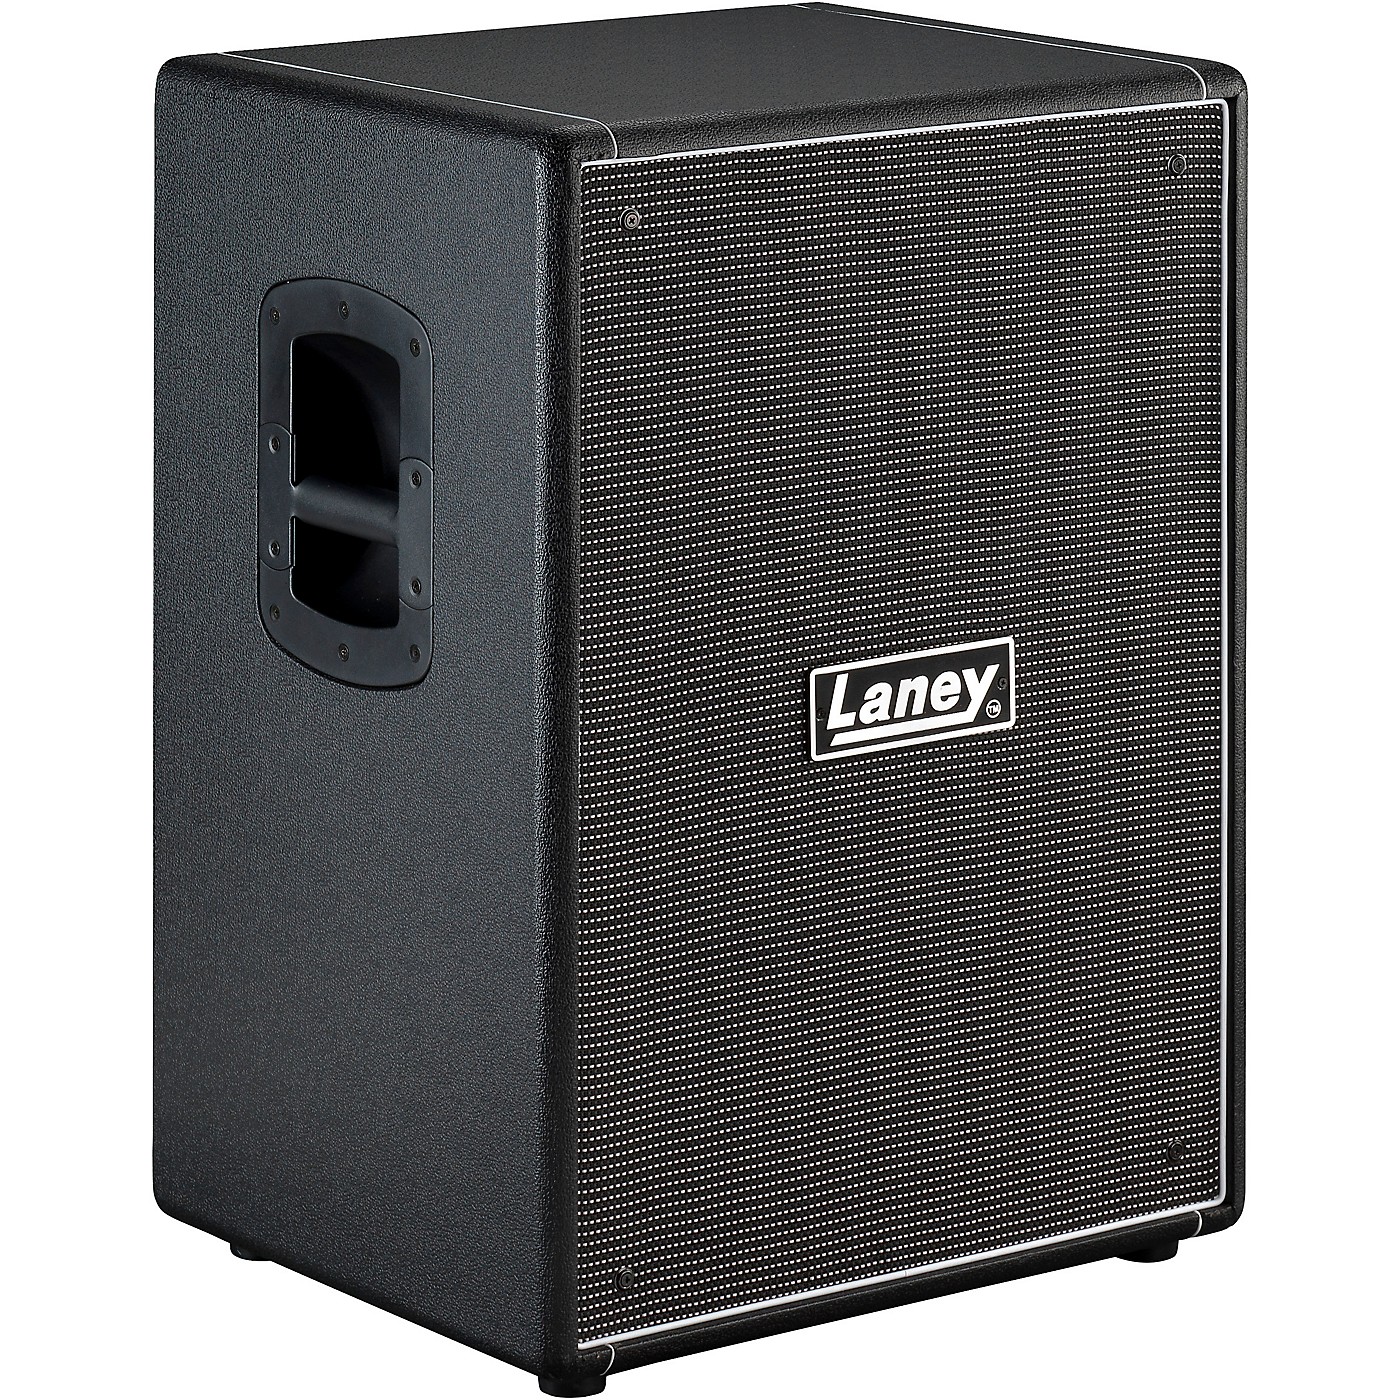 Laney Digbeth DBV212 500W 2x12 Bass Speaker Cabinet thumbnail